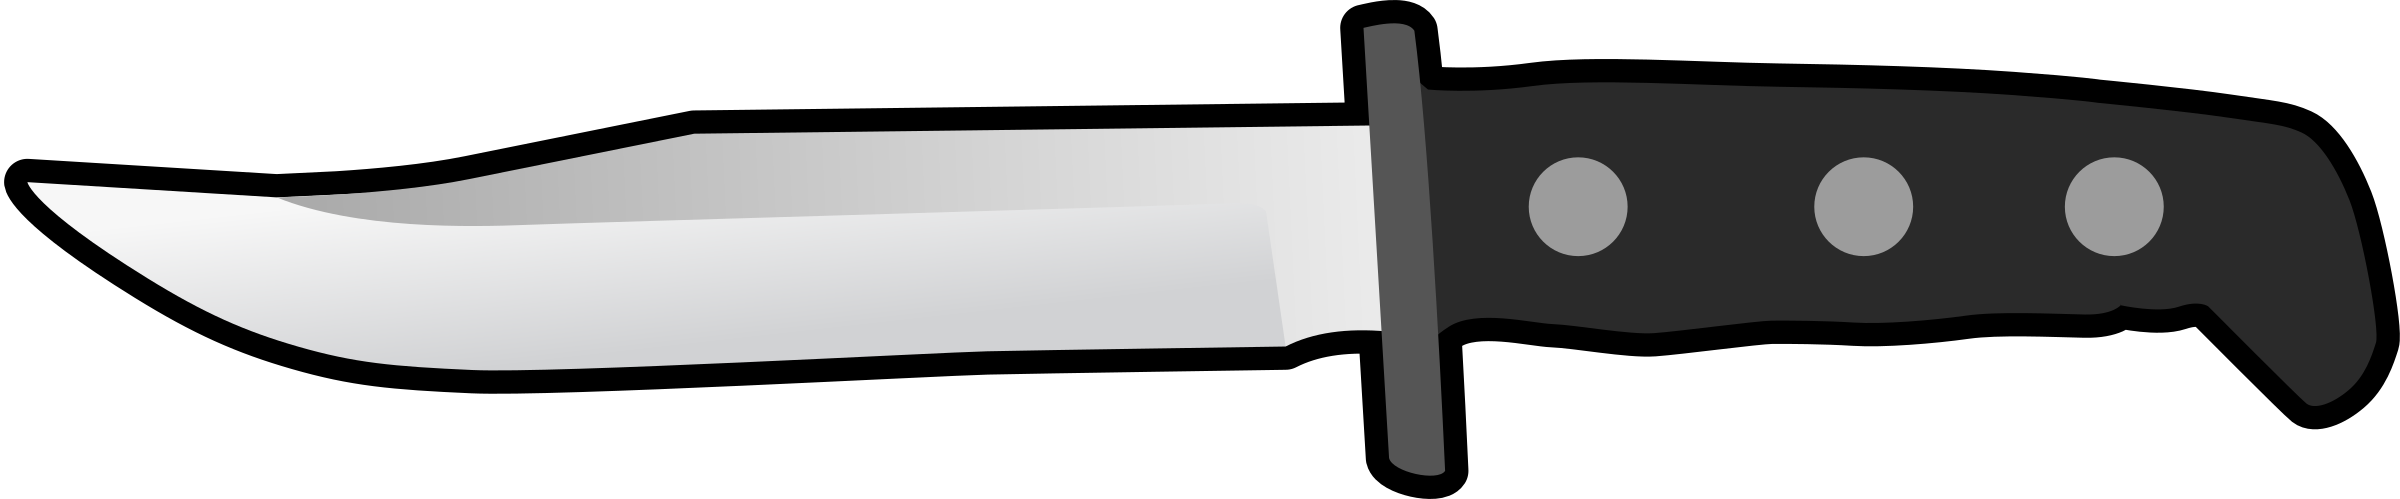 Big Image - Knife Clipart (2400x499)